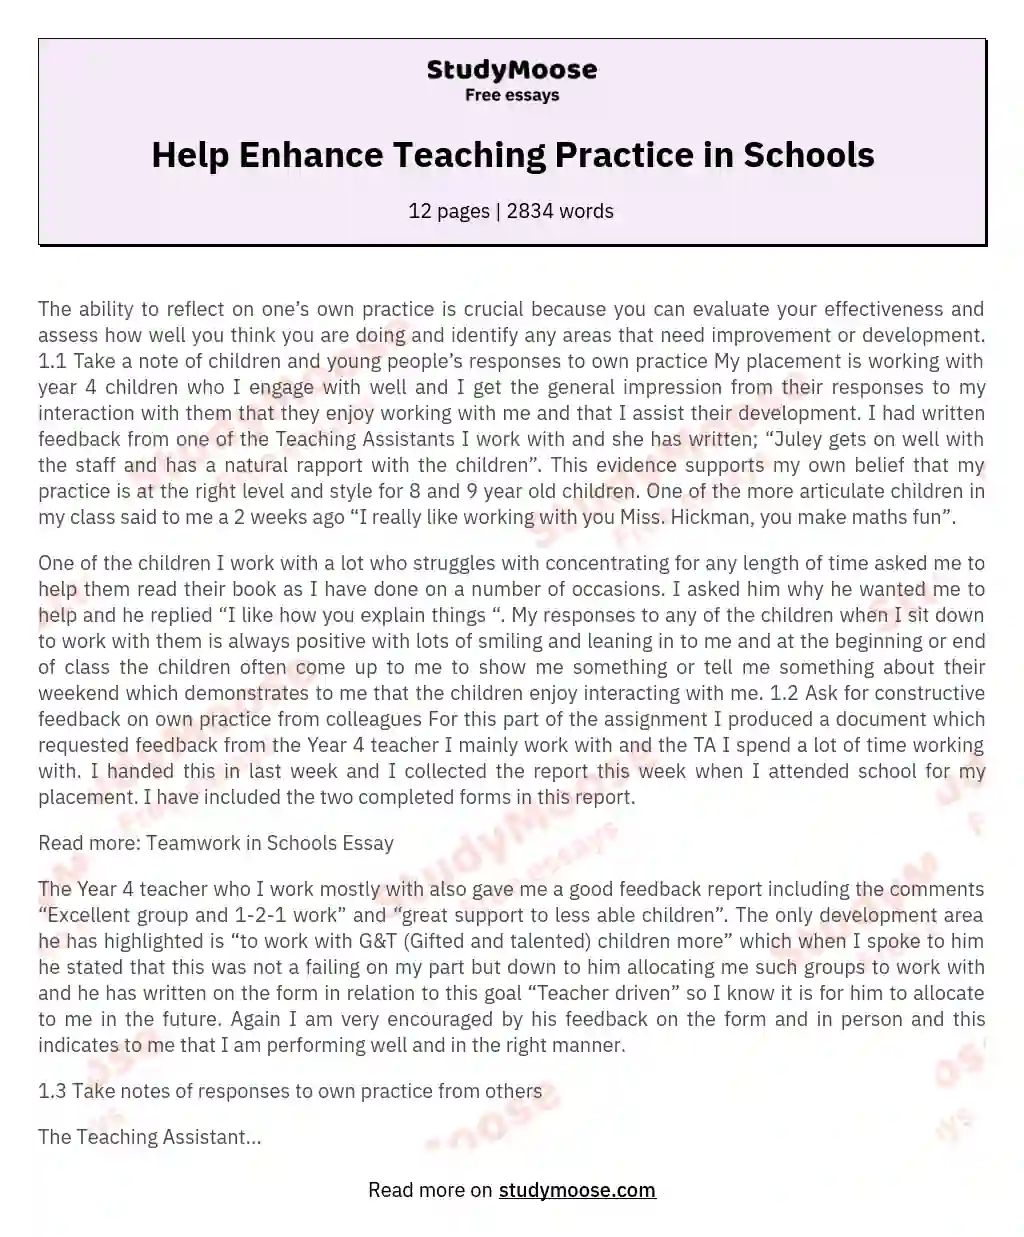 Help Enhance Teaching Practice in Schools